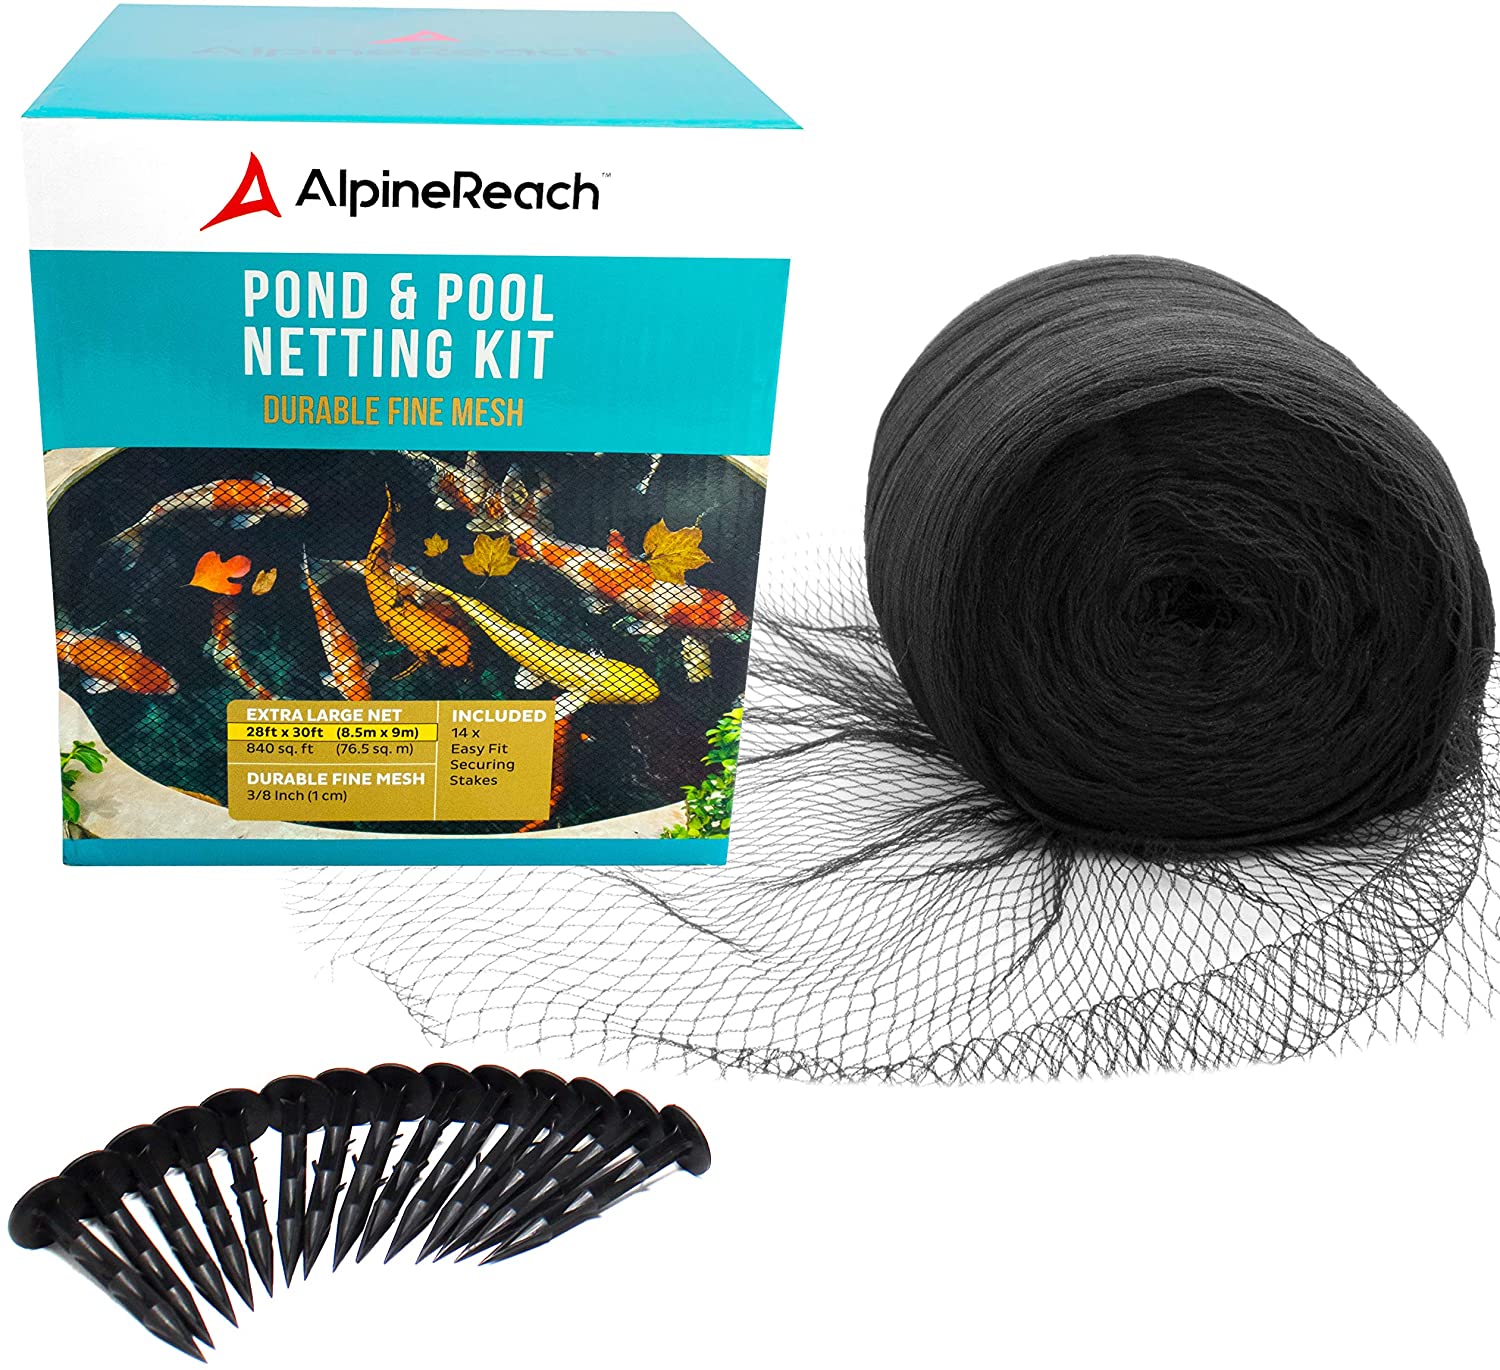 AlpineReach Koi Pond Netting Kit 28 x 30 ft Black Heavy Duty Woven Fine Mesh Net Cover for Leaves - Protects Koi Fish from Blue